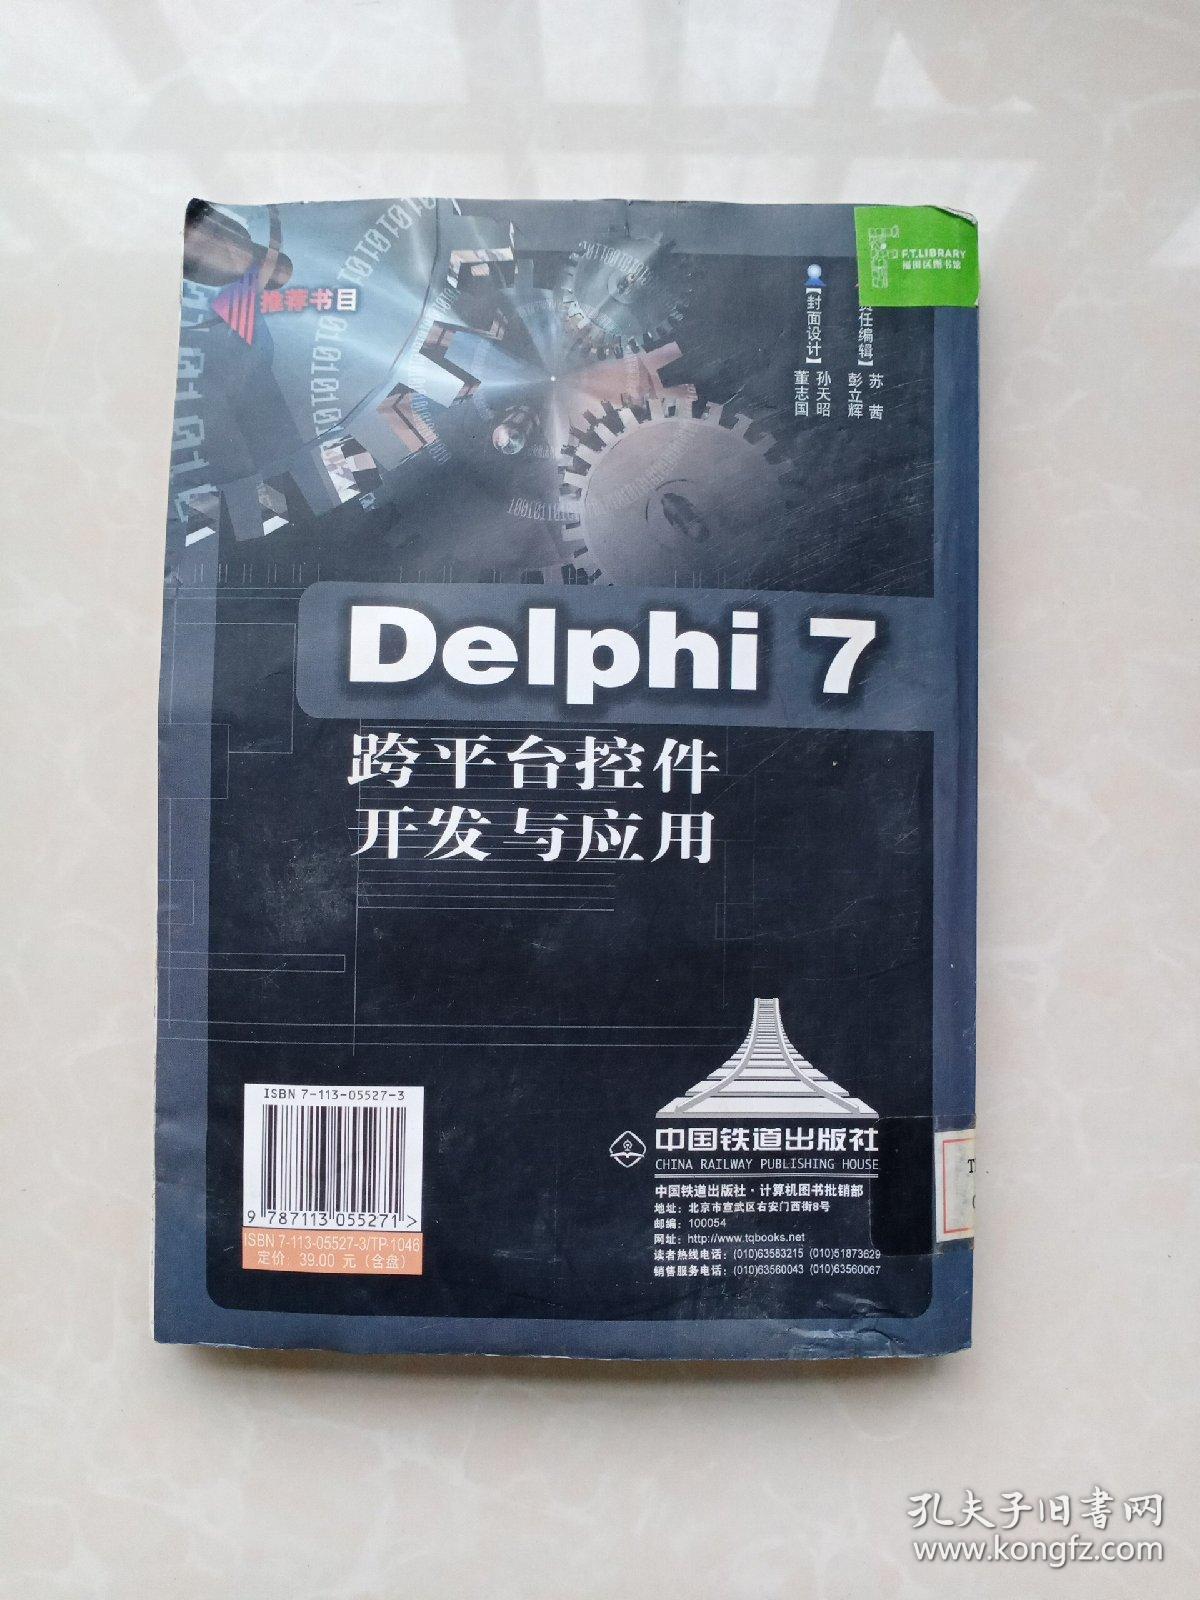 Delphi 7跨平台控件开发与应用（无光盘）